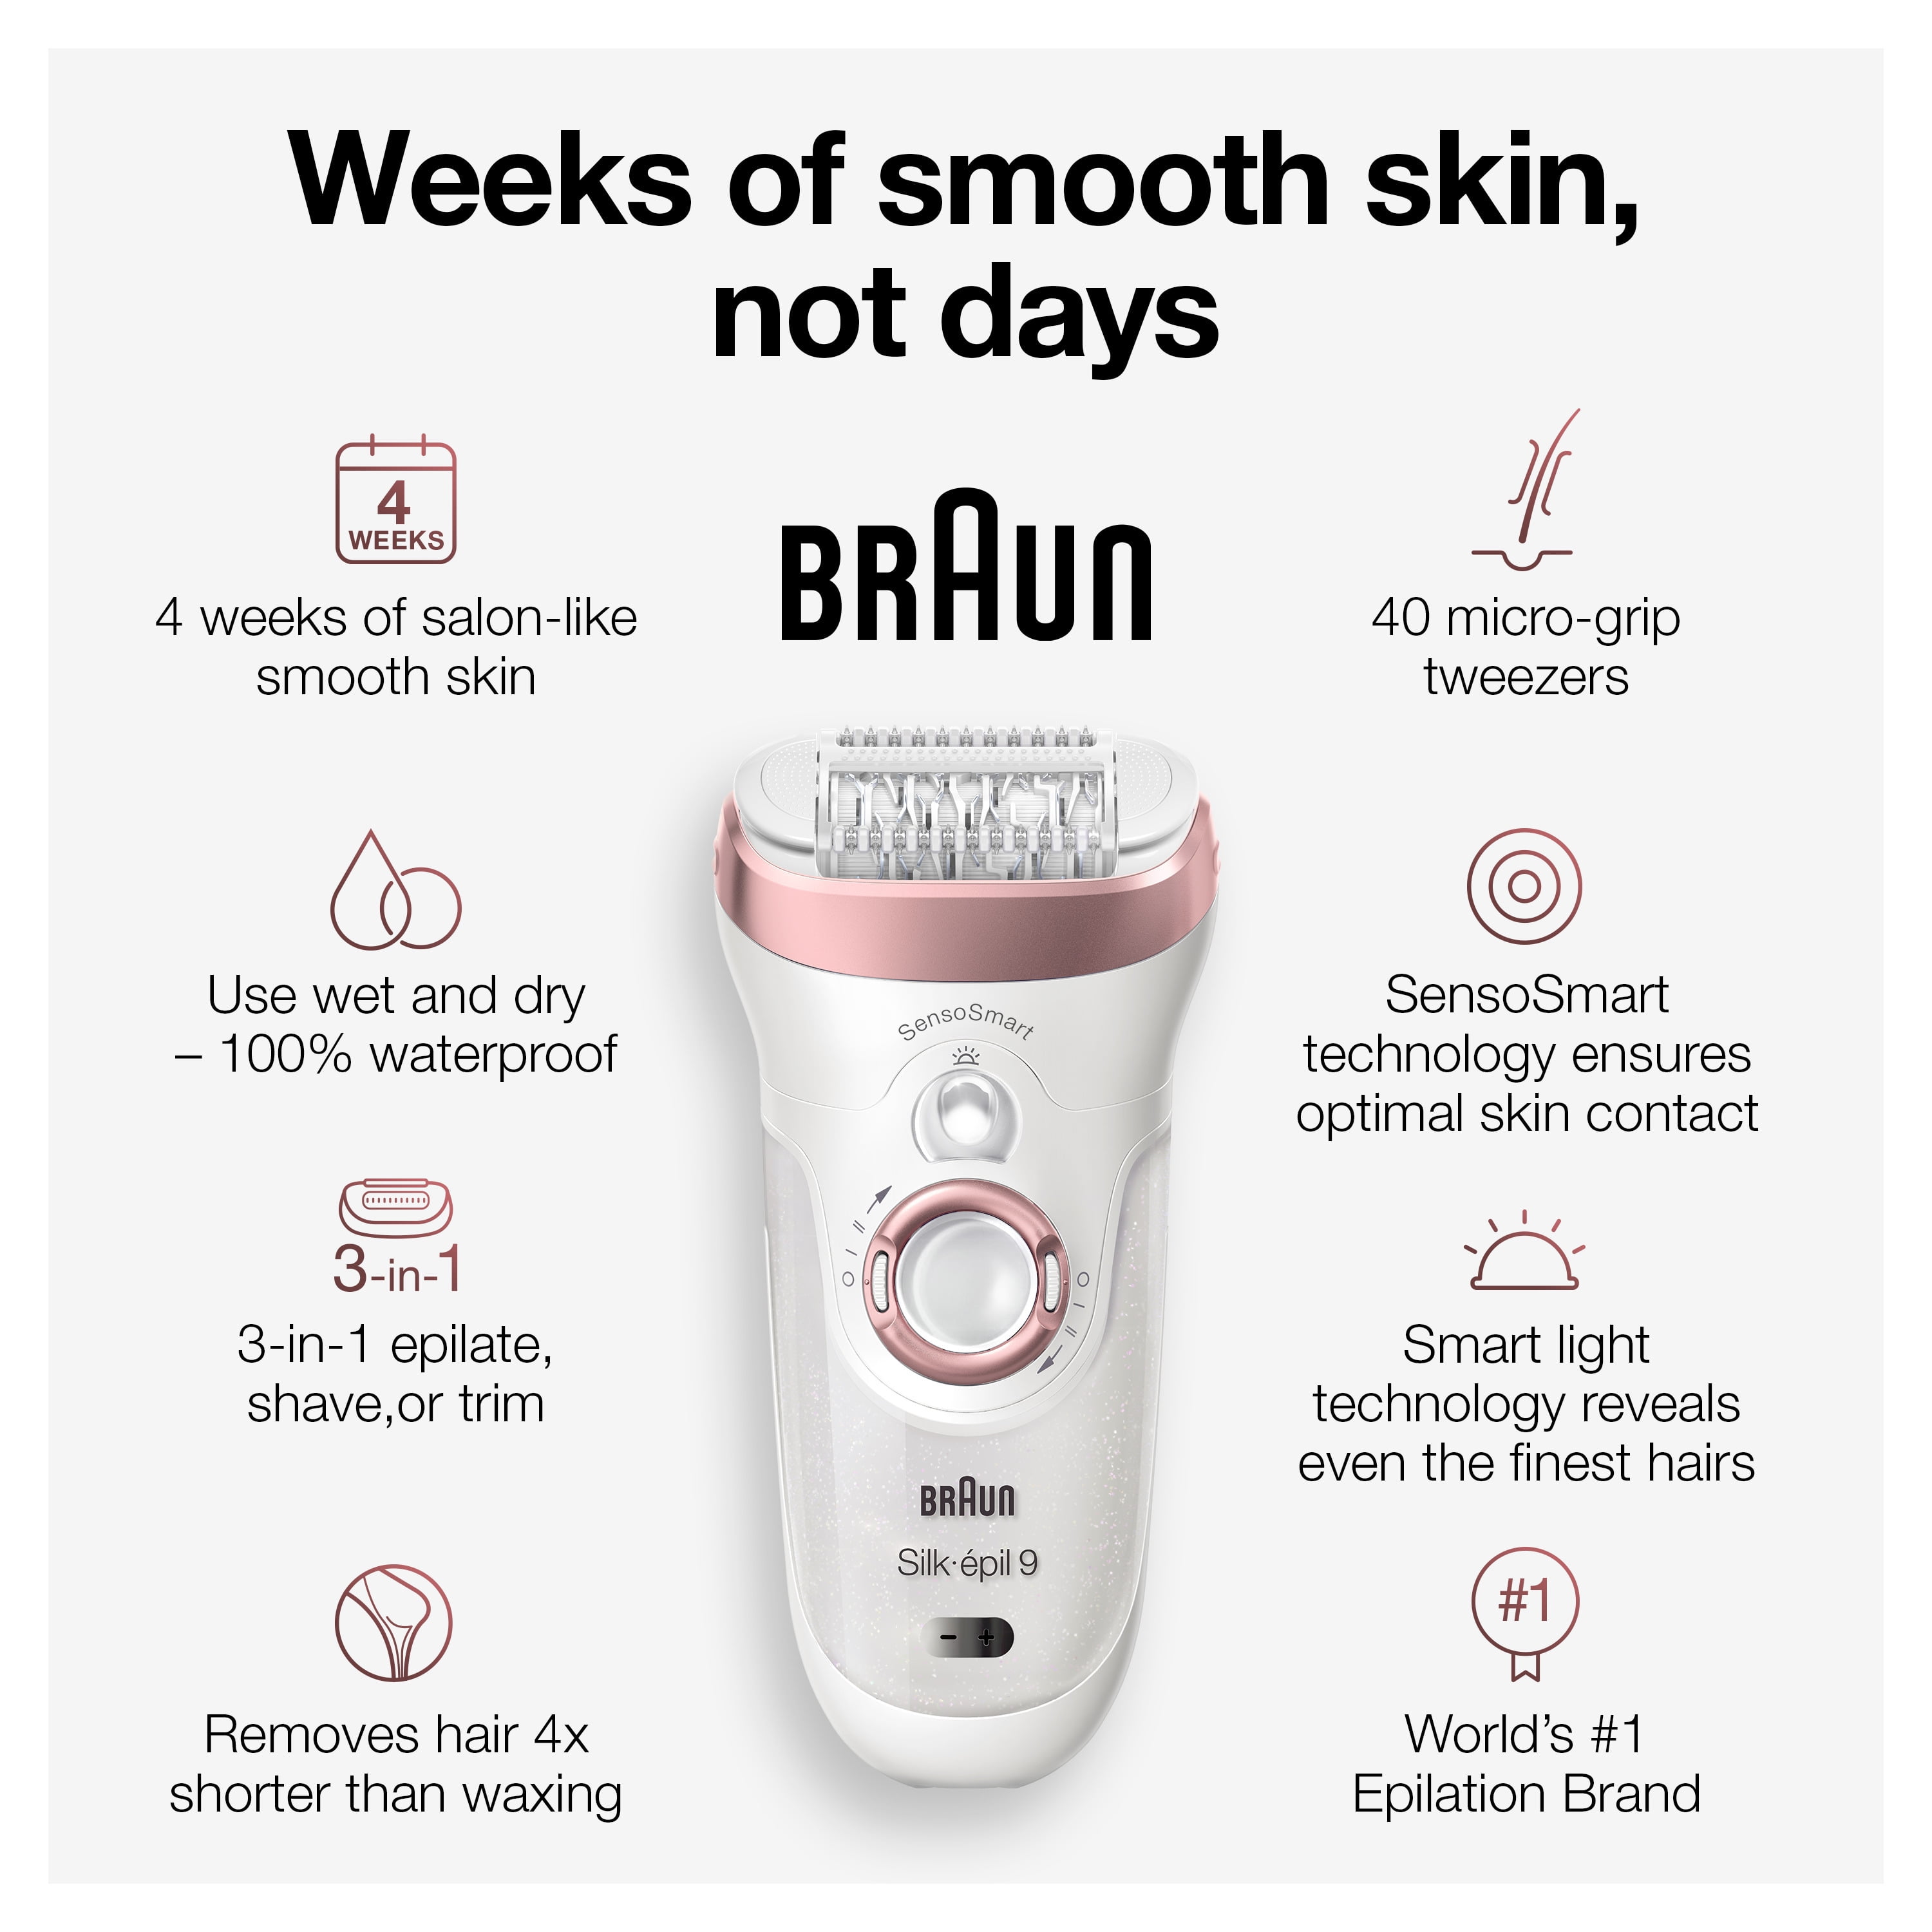 Braun Silk-Epil Beauty Set 9 9-985 Deluxe 7-in-1 Cordless Wet & Dry Hair  Removal Epilator for Women